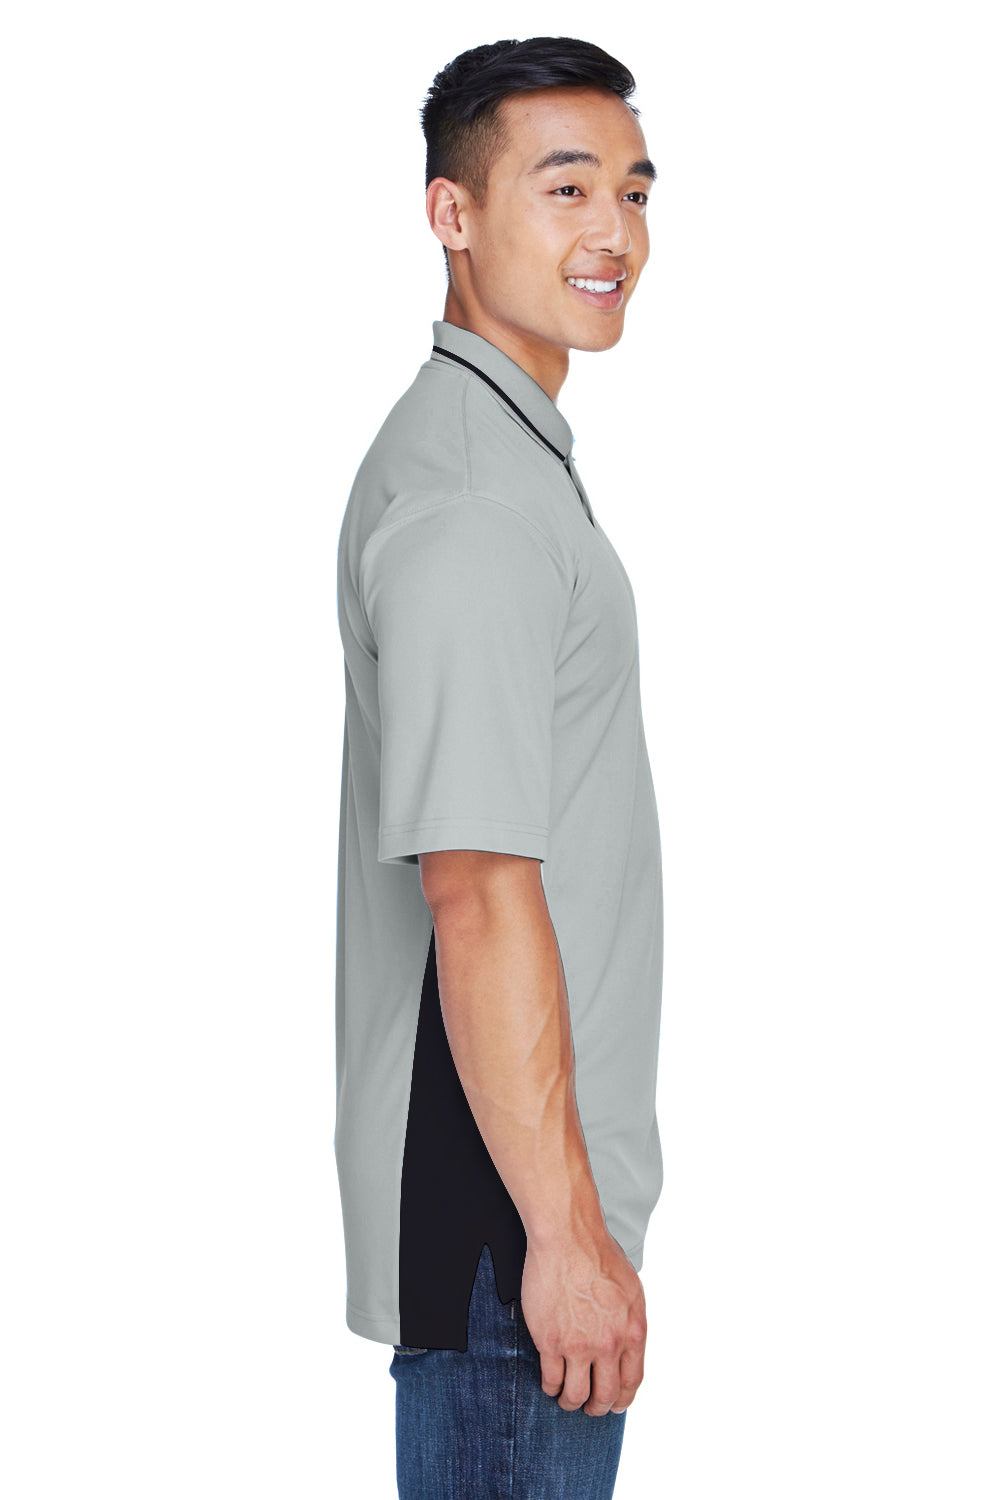 UltraClub 8406 Mens Cool & Dry Moisture Wicking Short Sleeve Polo Shirt Grey/Black Side